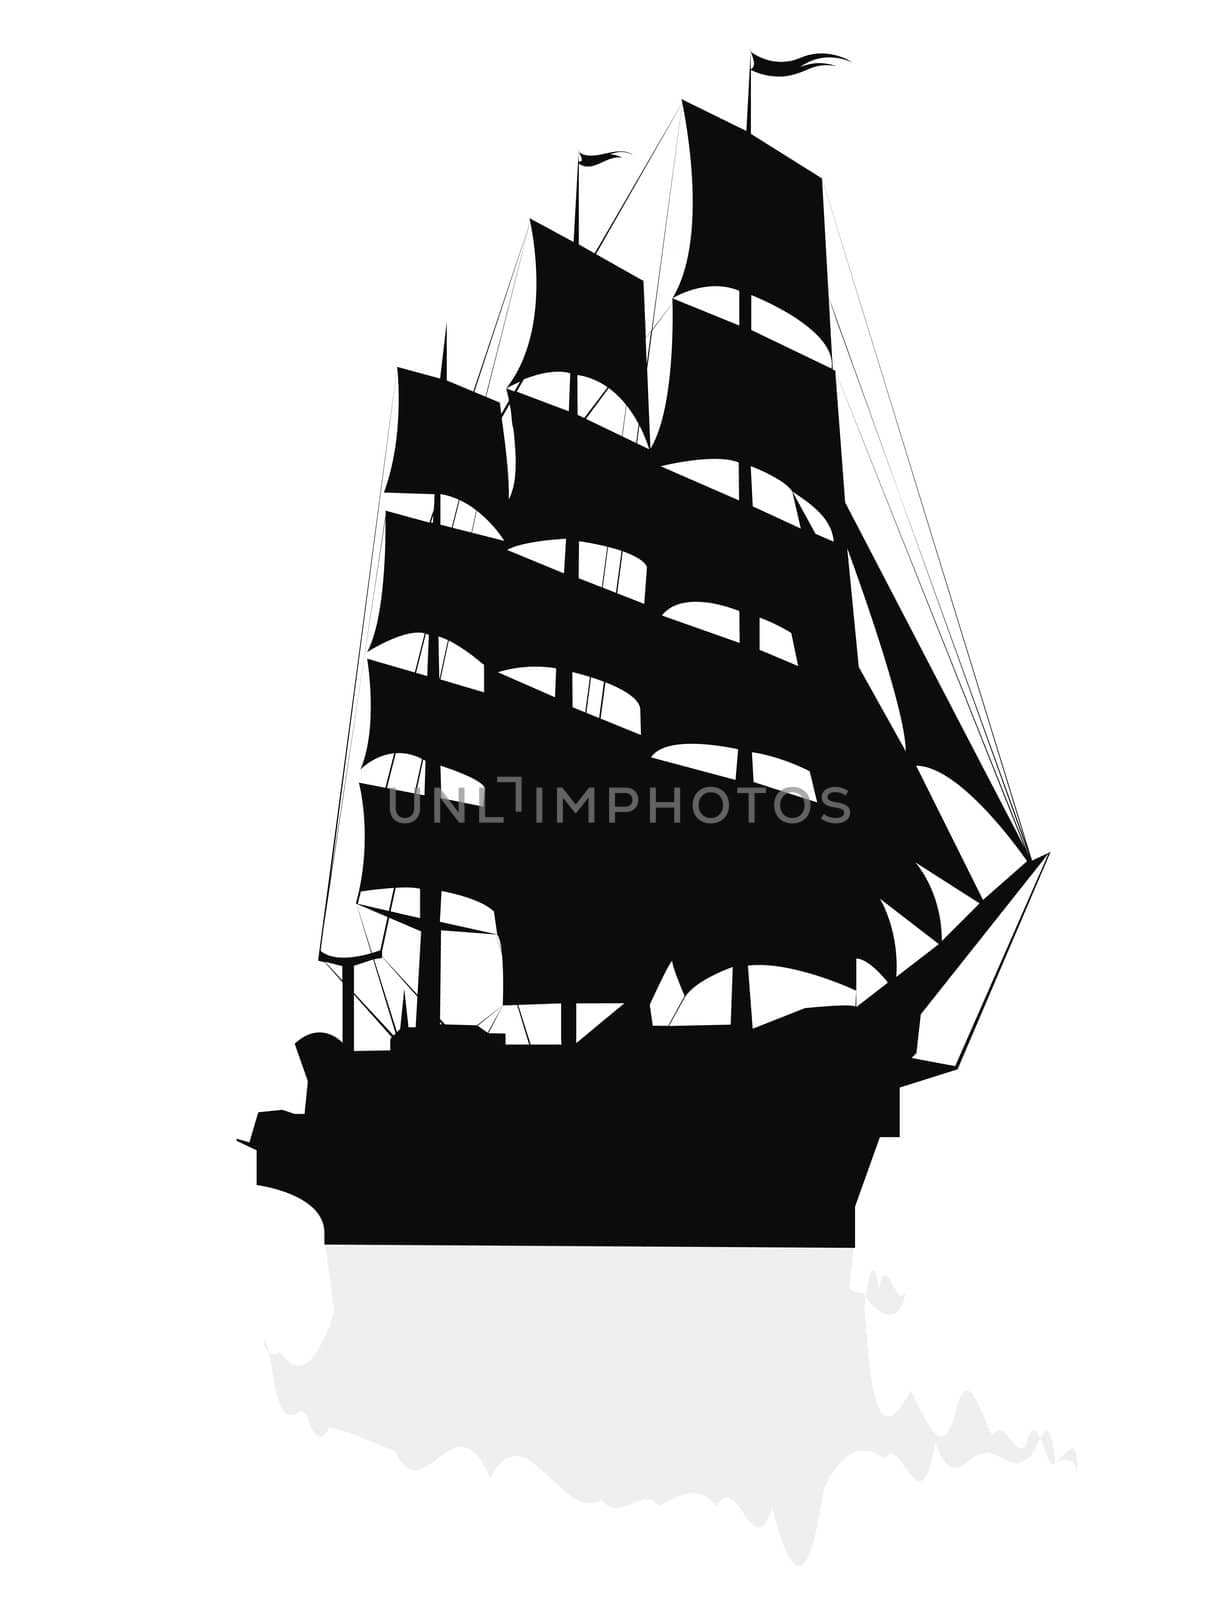 Big sailing ship by Lirch